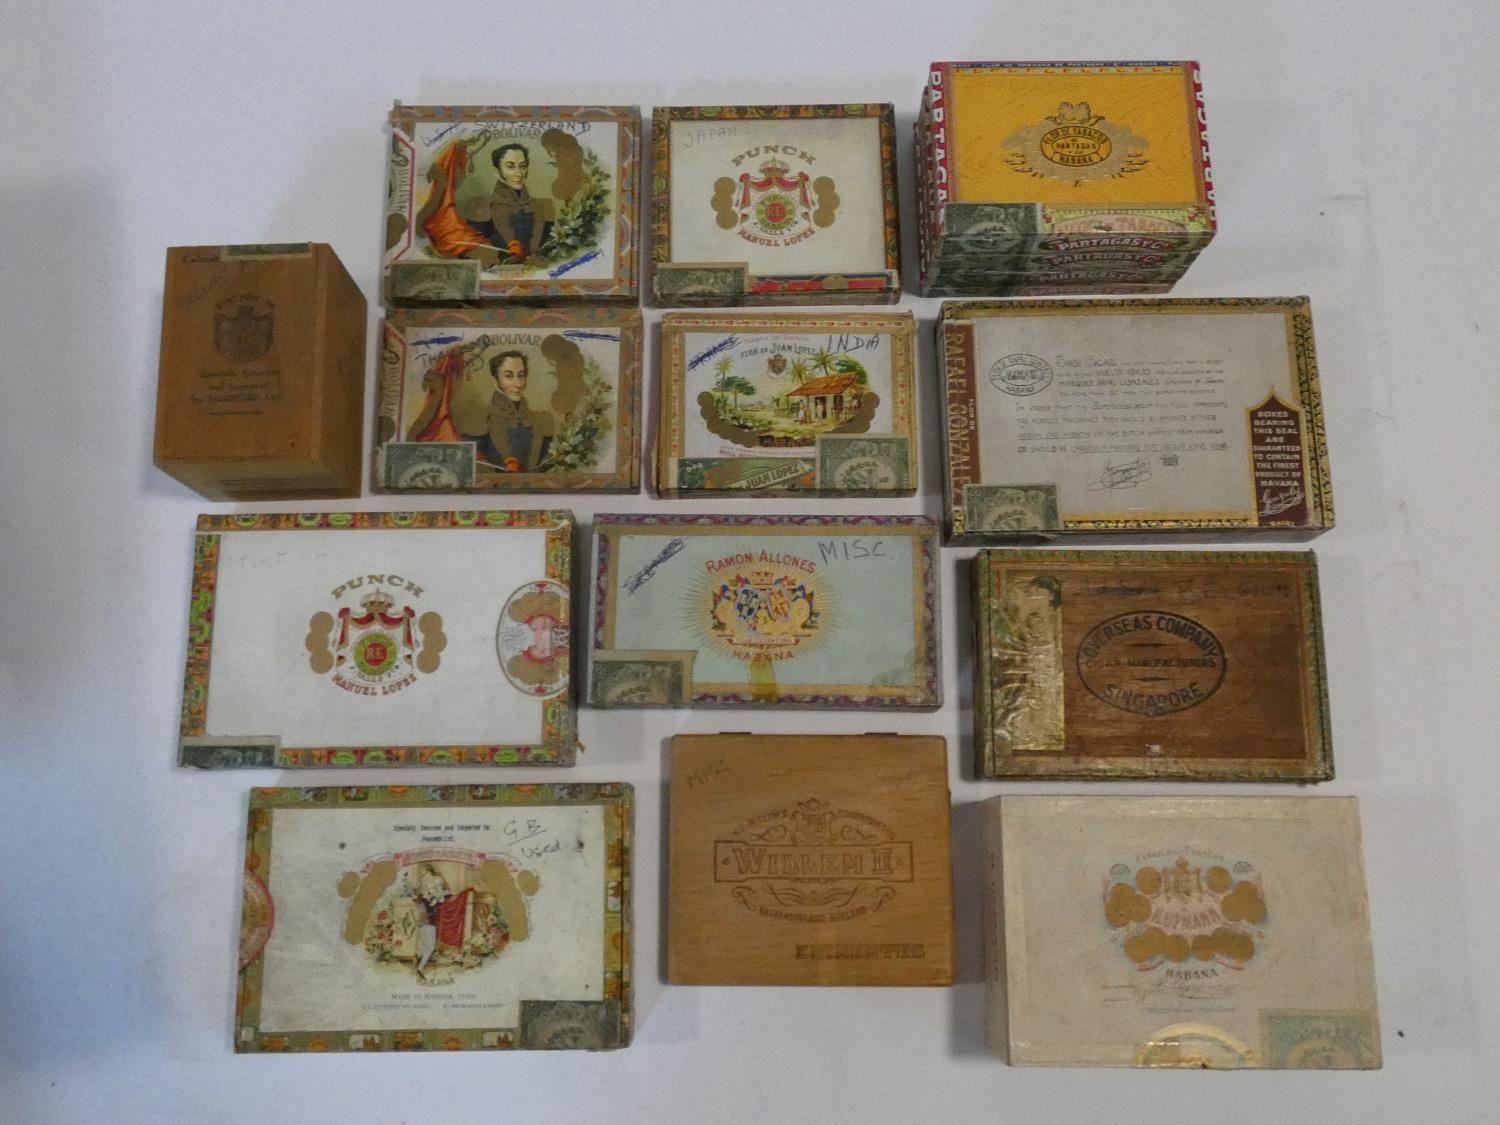 A miscellaneous collection of thirteen vintage Cuban cigar boxes, various brands. H.8 L.15 W.21cm